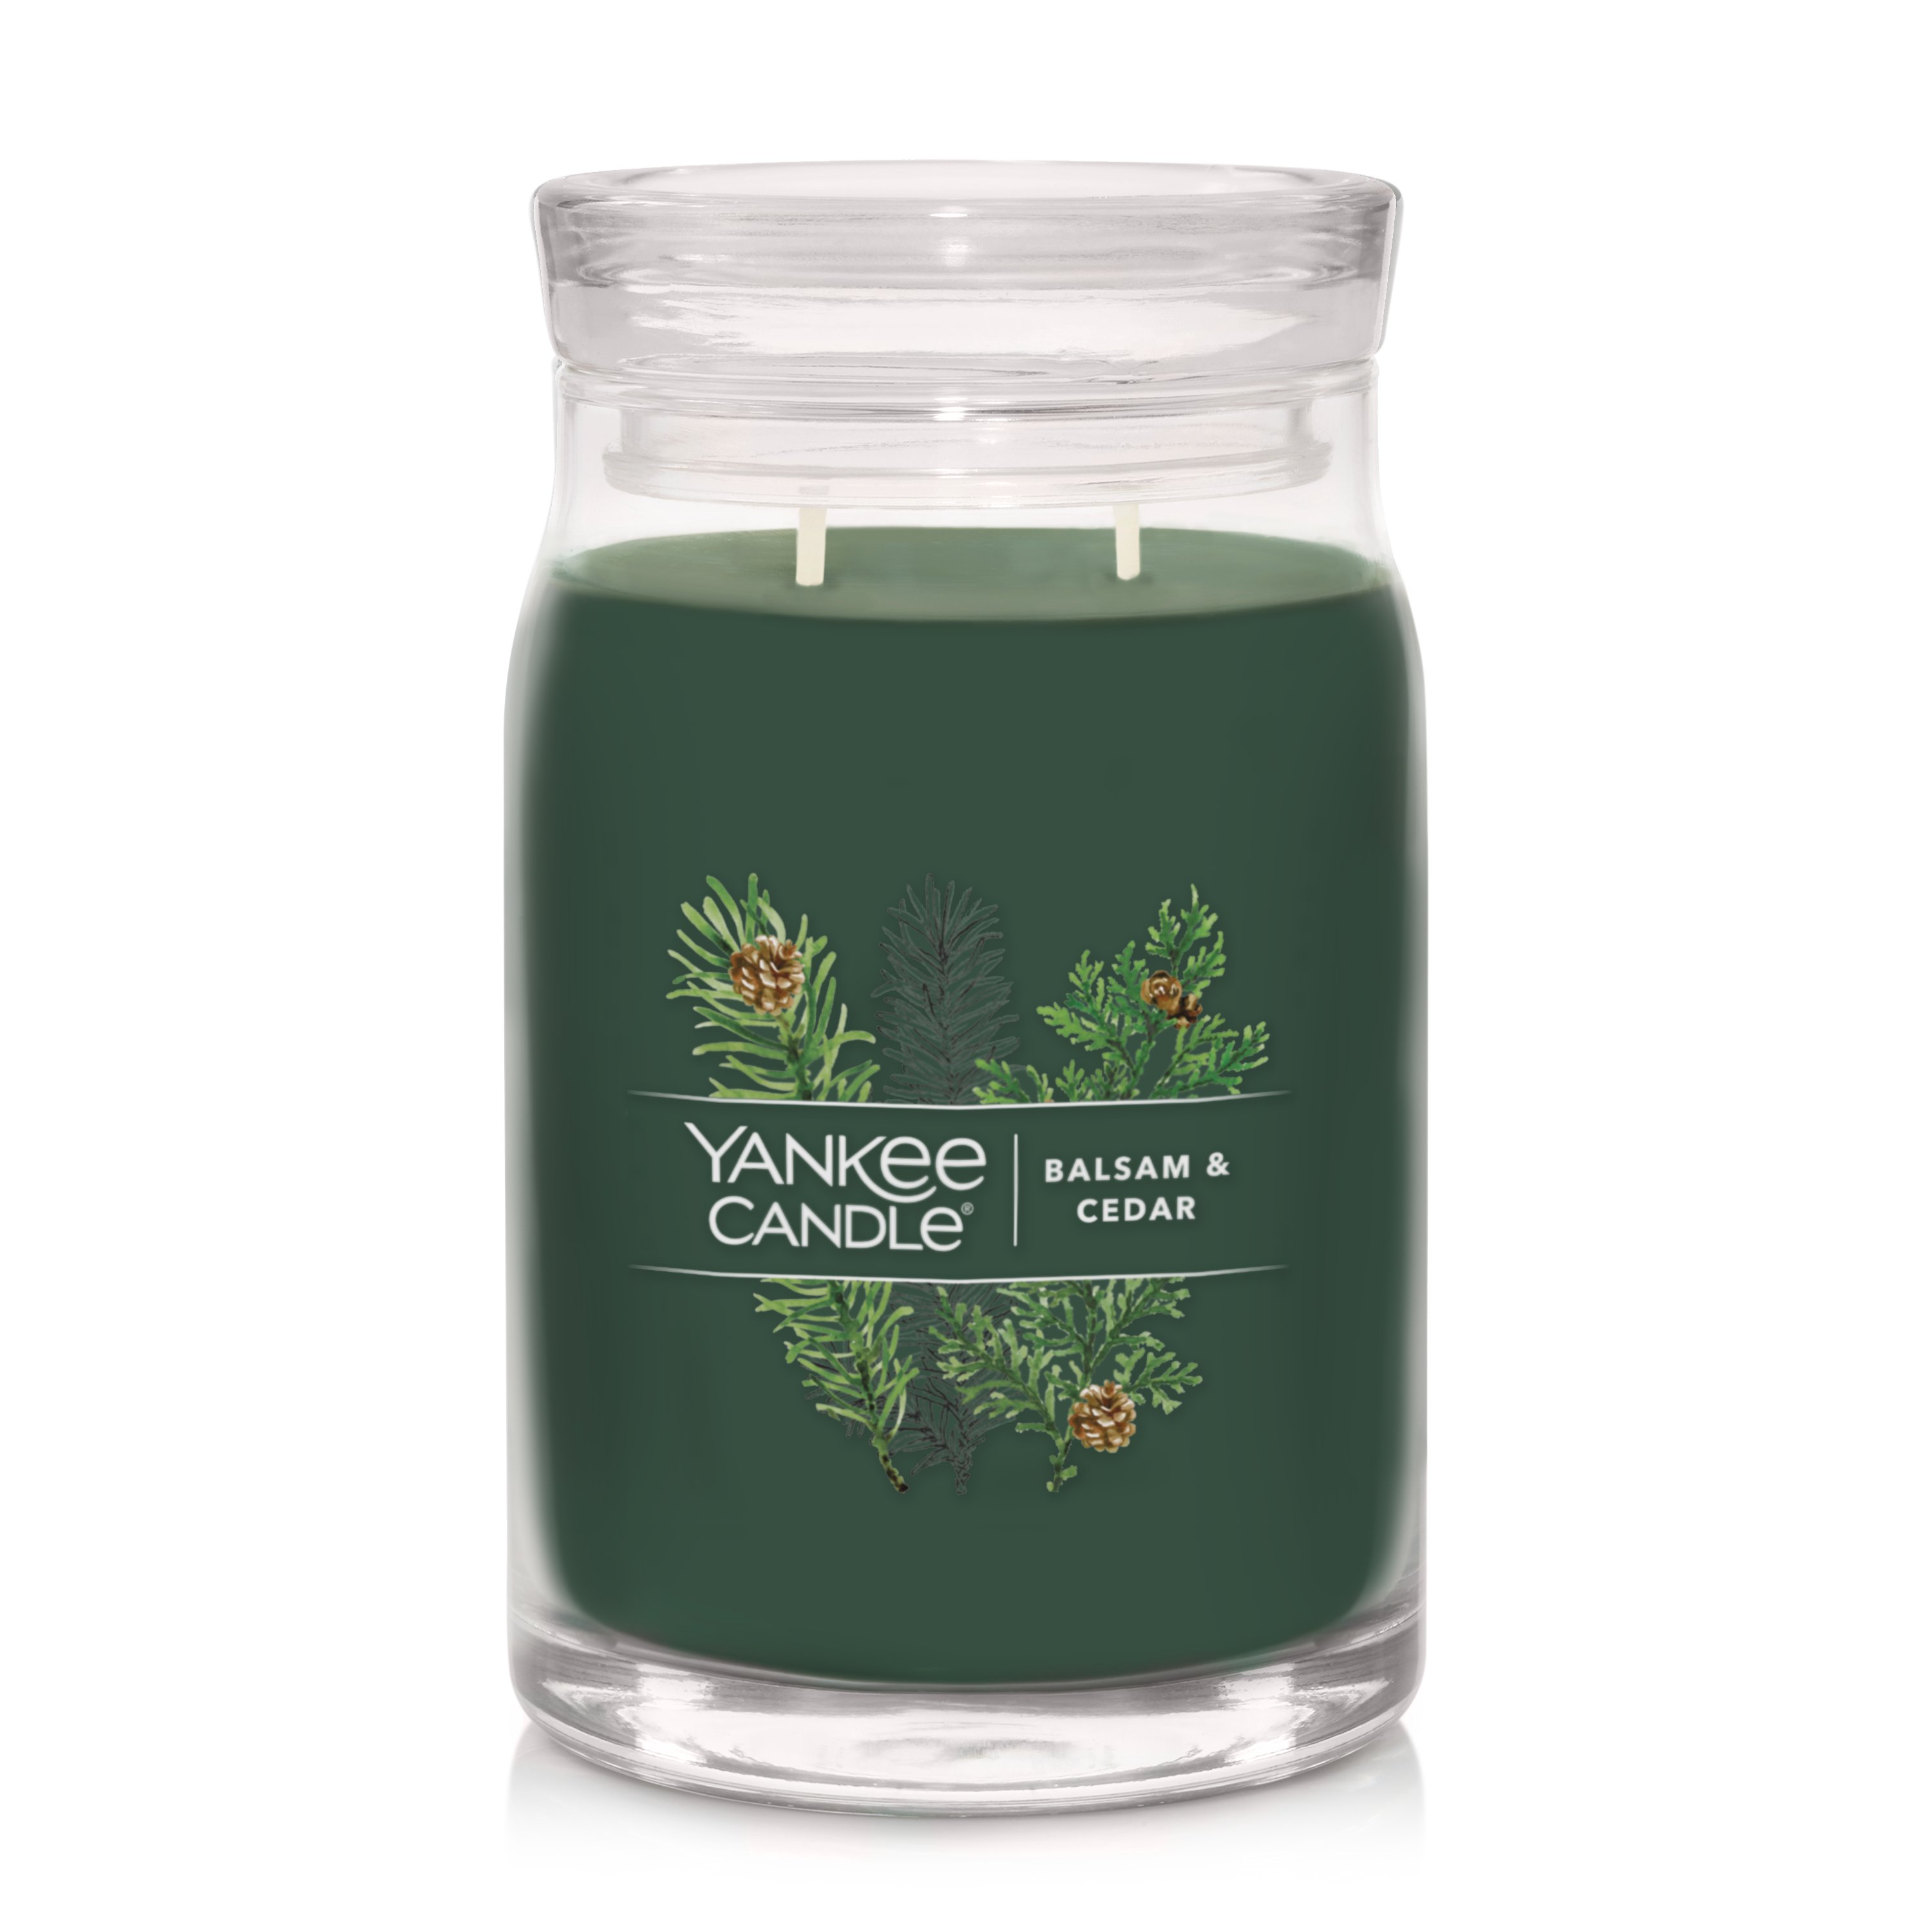 Yankee candle large jar 'Fresh Balsam Fir' 